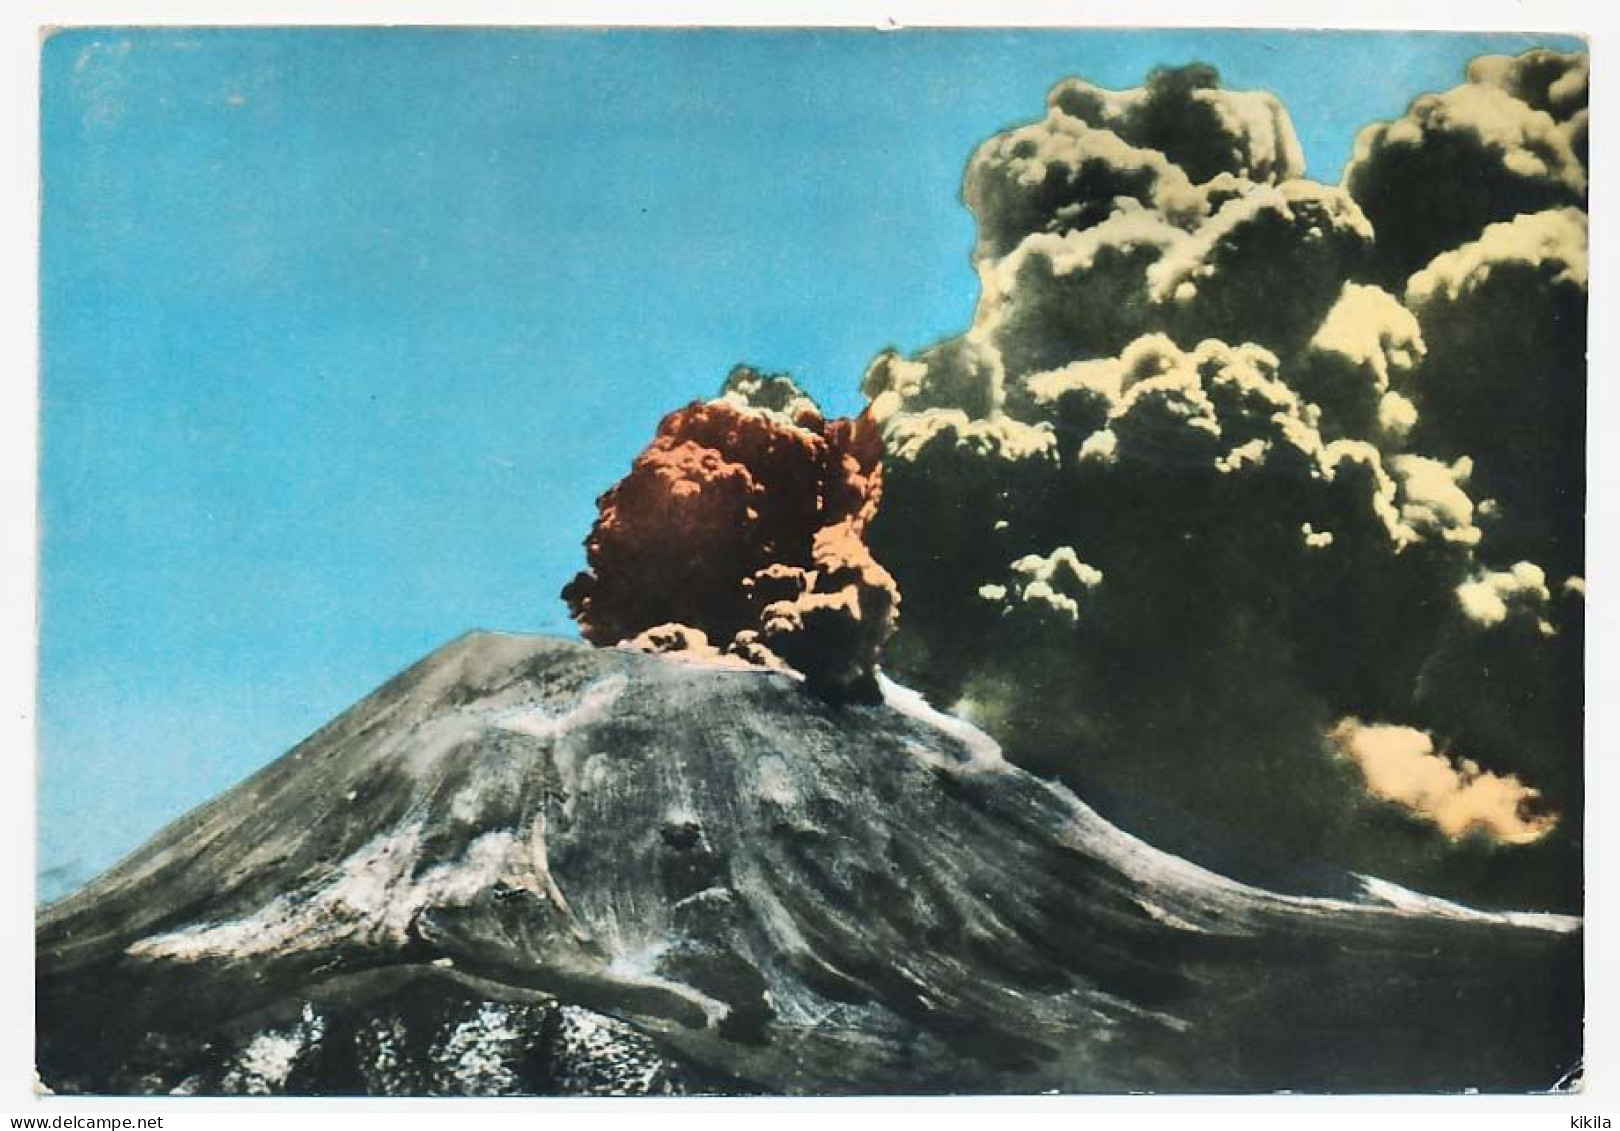 CPSM 10.5 X 15 Italie (26) NAPOLI Naples Vesuvio Eruzione 1944 Volcan Vésuve éruption De 1944 - Napoli (Naples)